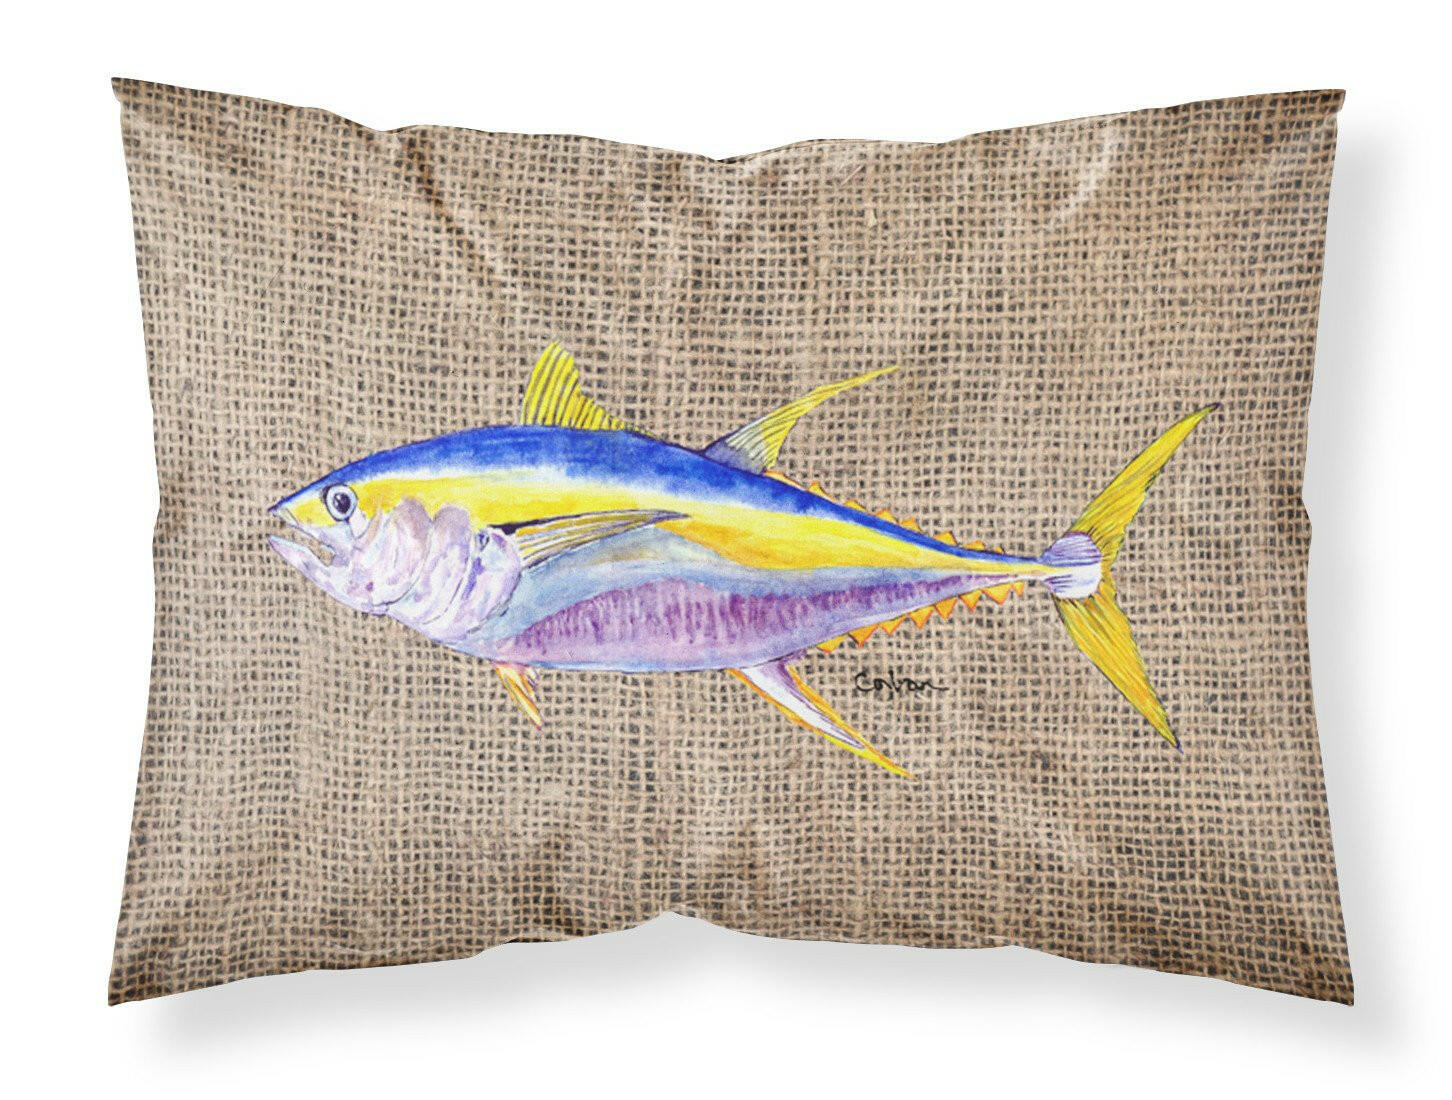 Fish - Tuna Moisture wicking Fabric standard pillowcase by Caroline's Treasures